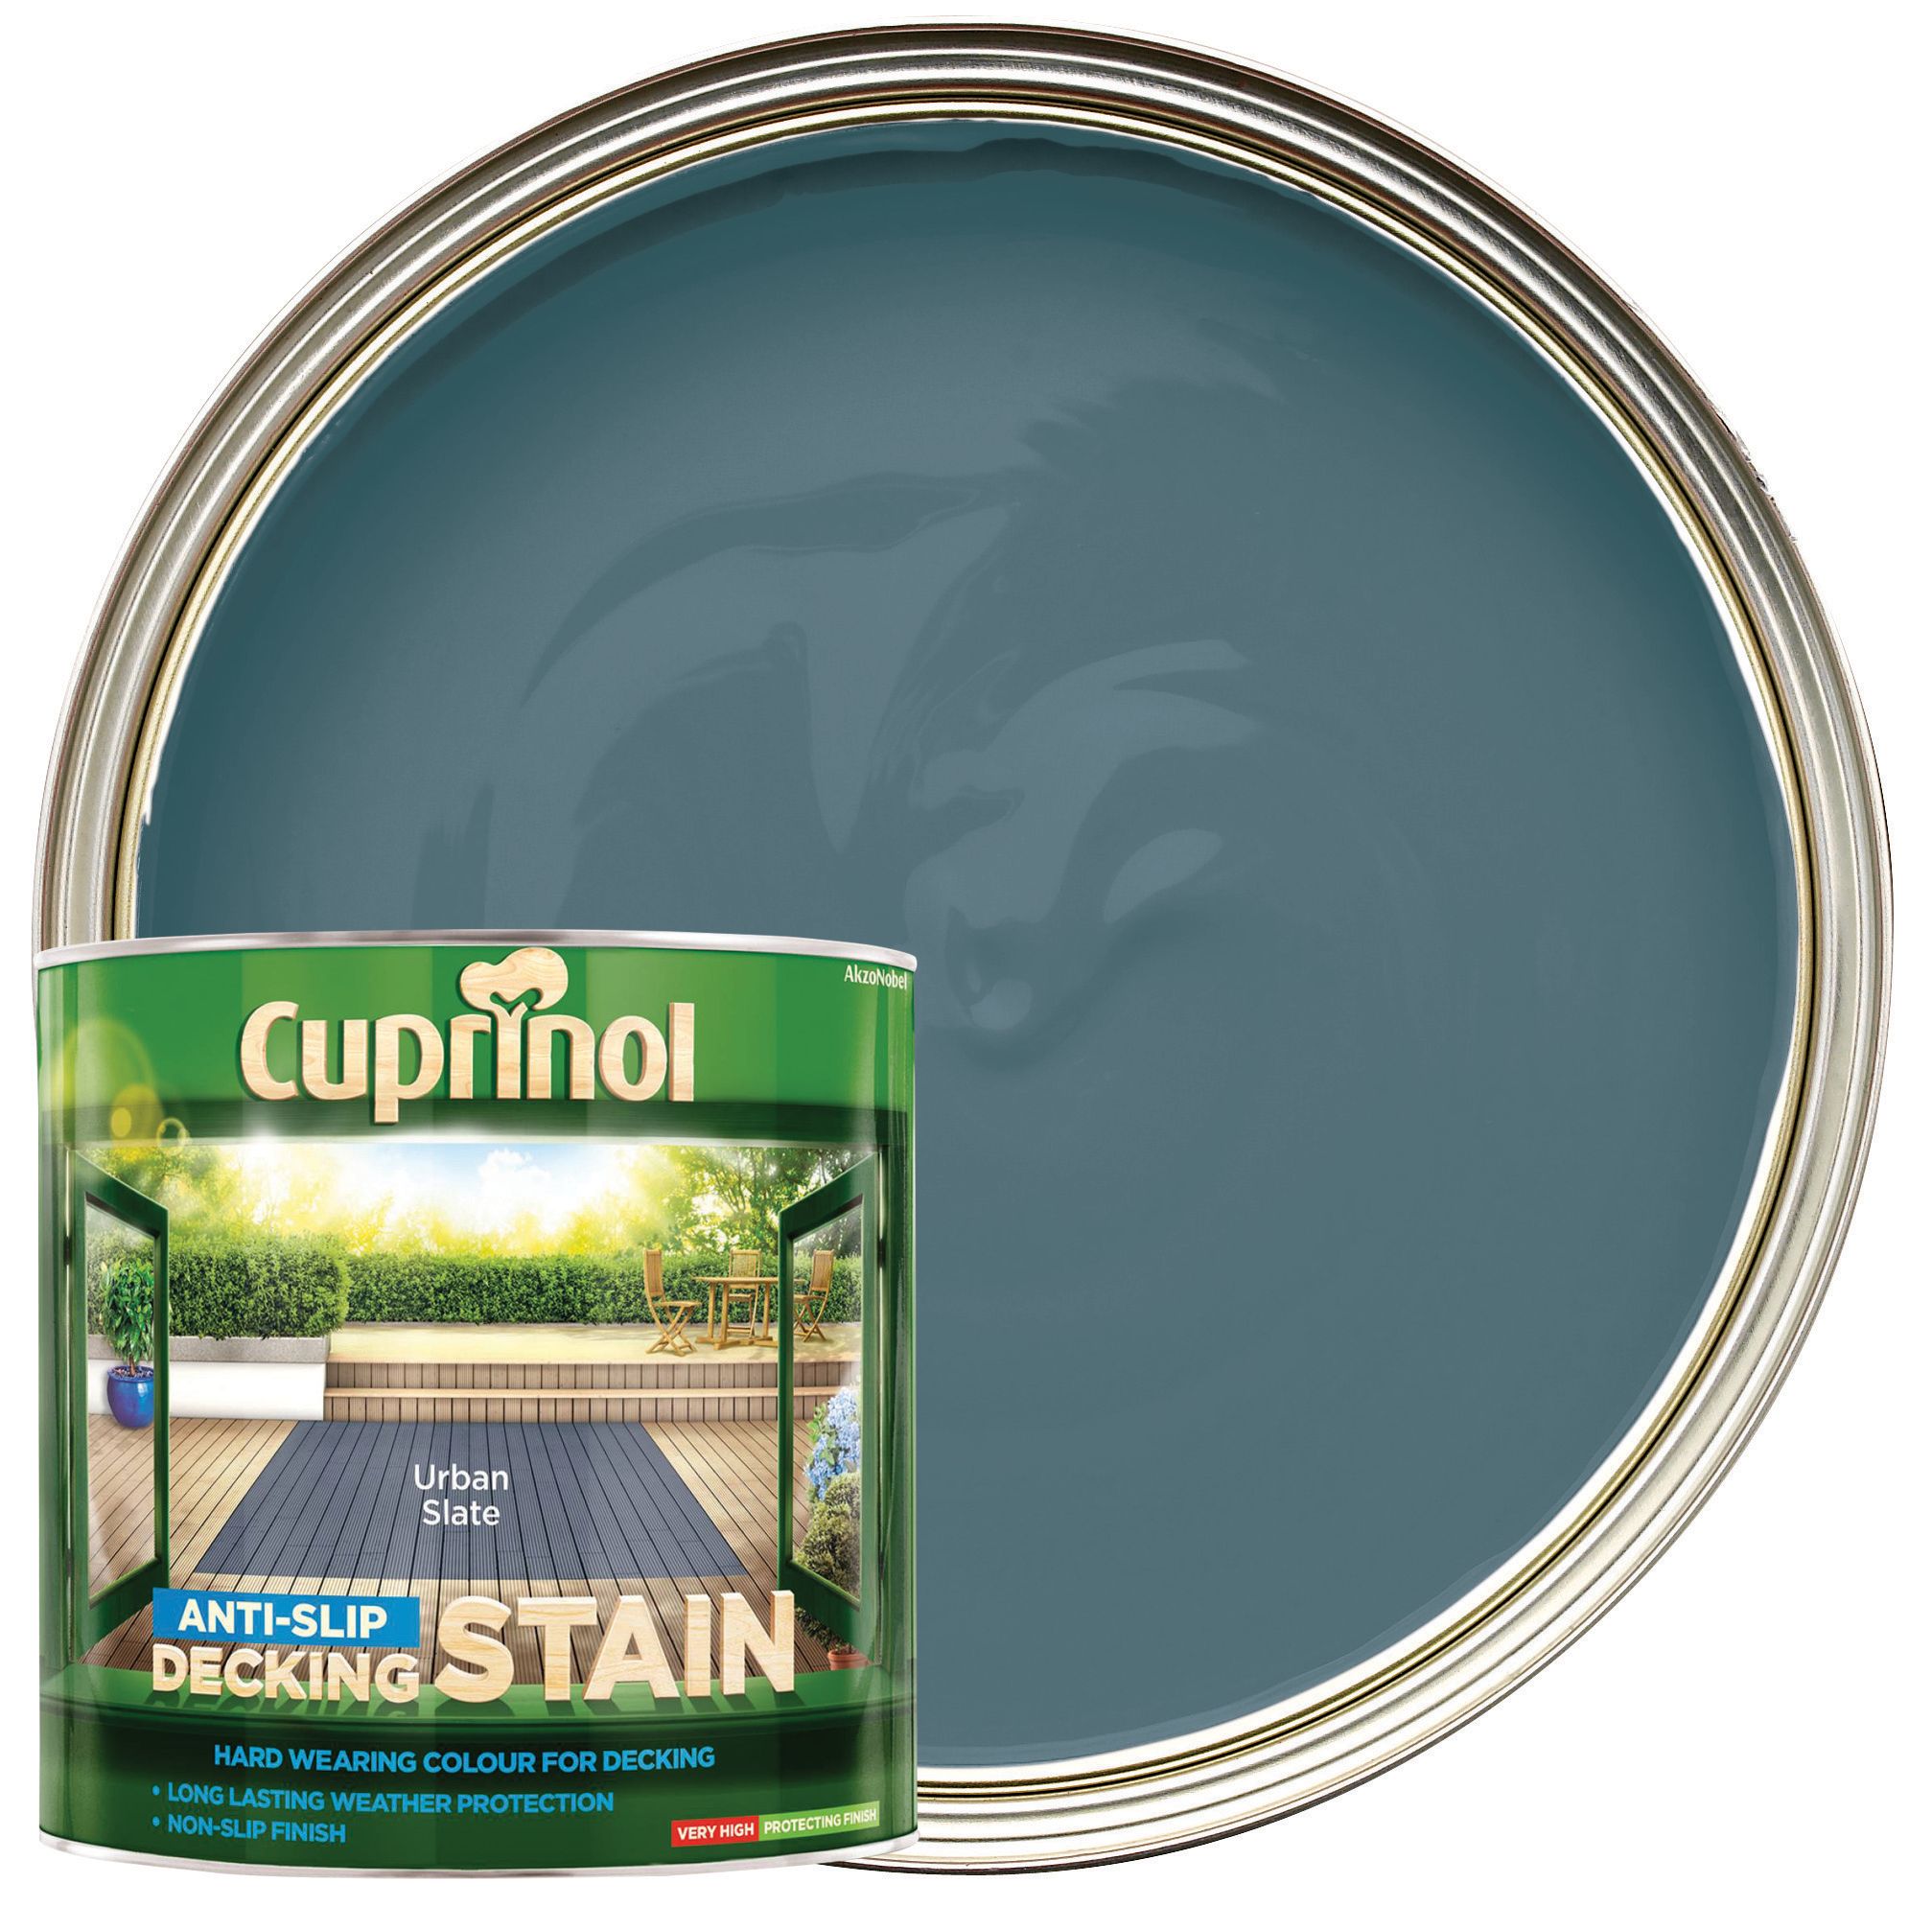 Cuprinol Anti-Slip Decking Stain - Urban Slate 2.5L